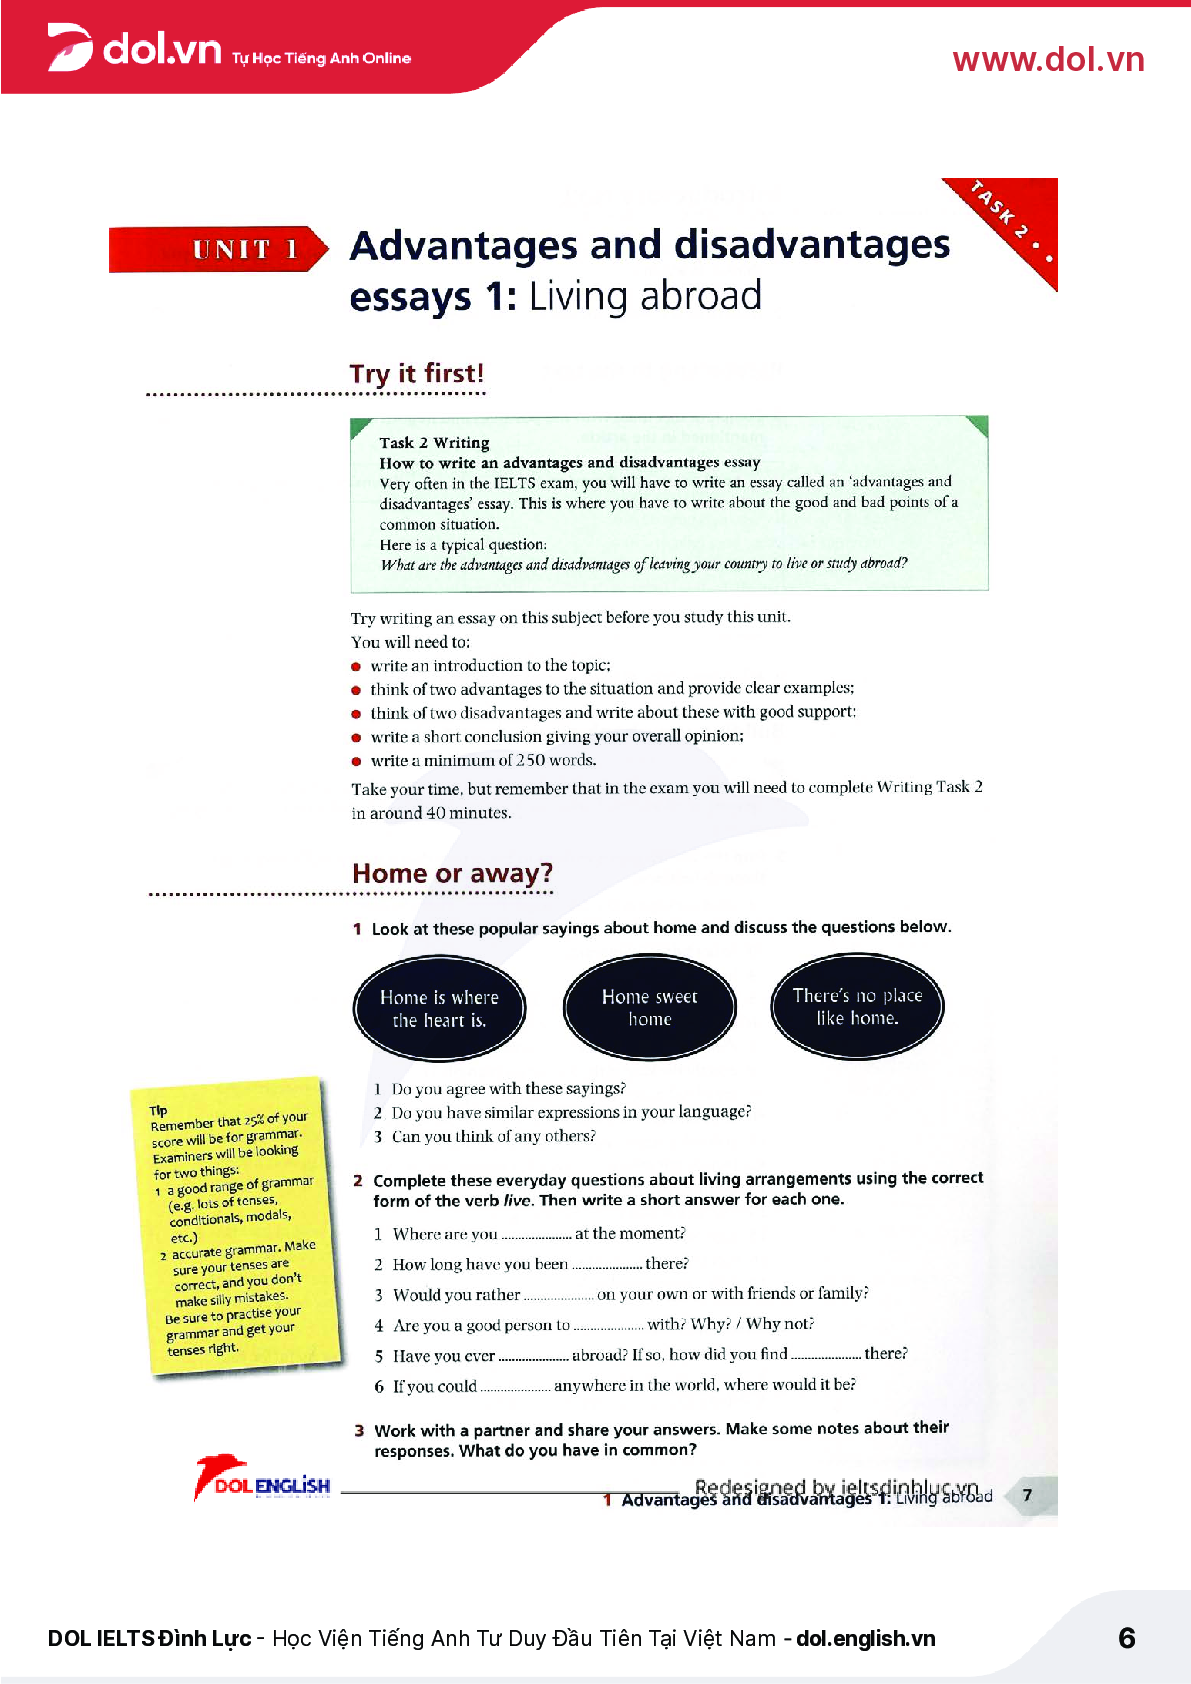 Sách IELTS Advantage Writing Skills pdf | Xem online, tải PDF miễn phí (trang 6)